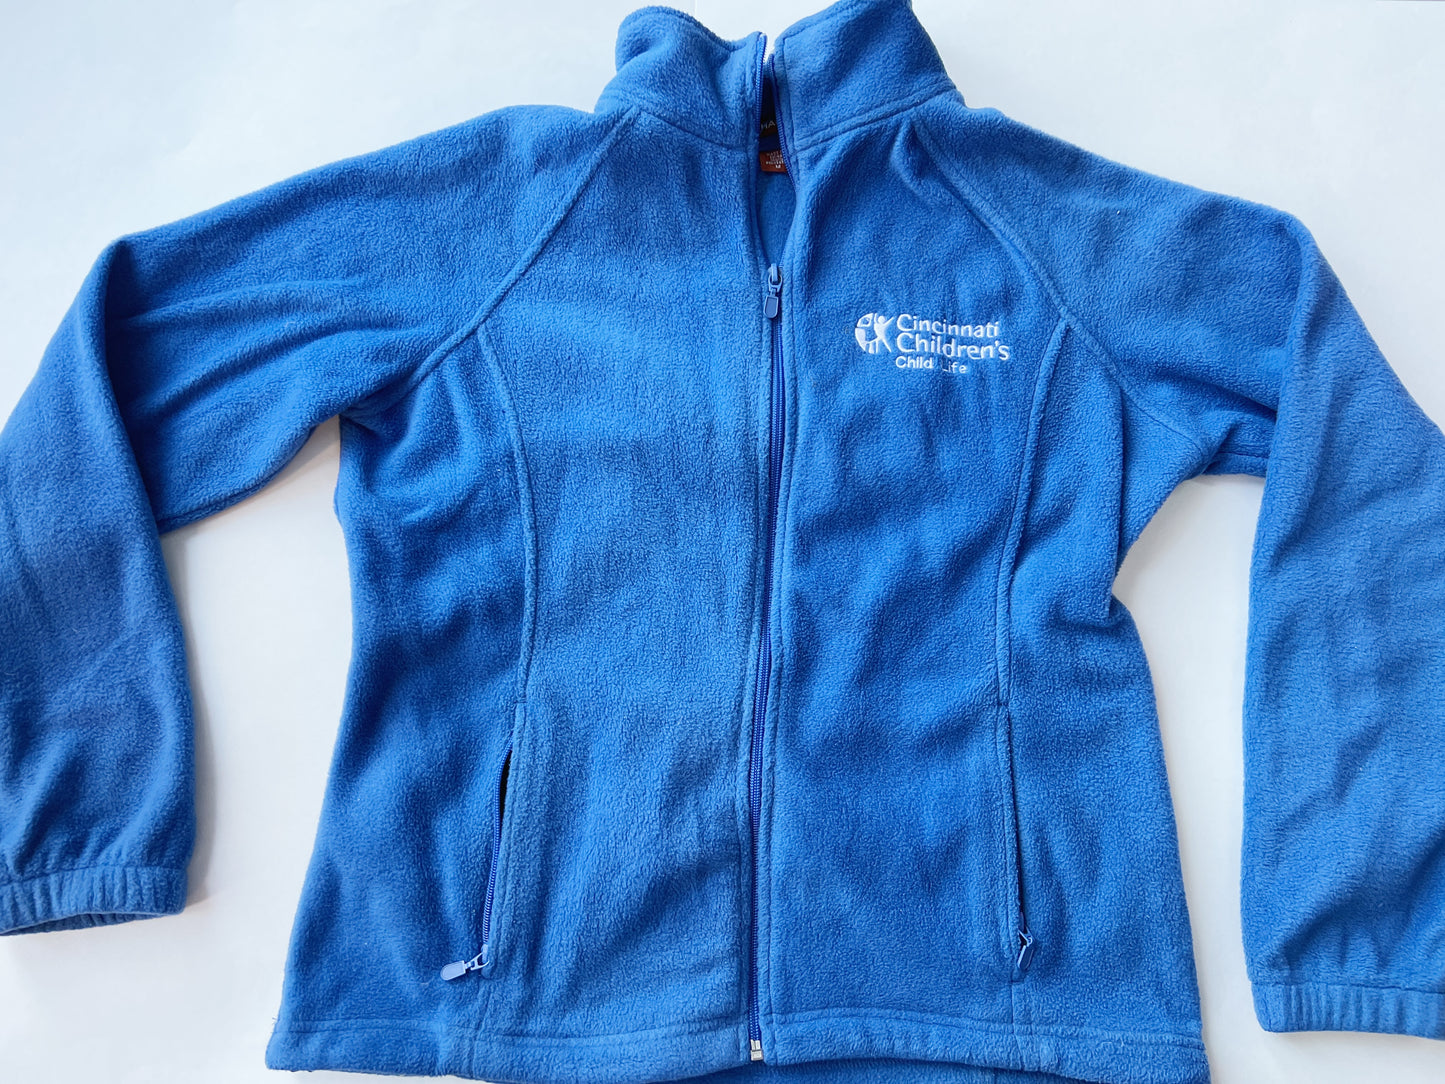 Size M blue Cincinnati Children’s Child Life zip-up (old logo). Zippered pockets and drawsting bottom for adjustable fit. VGUC.